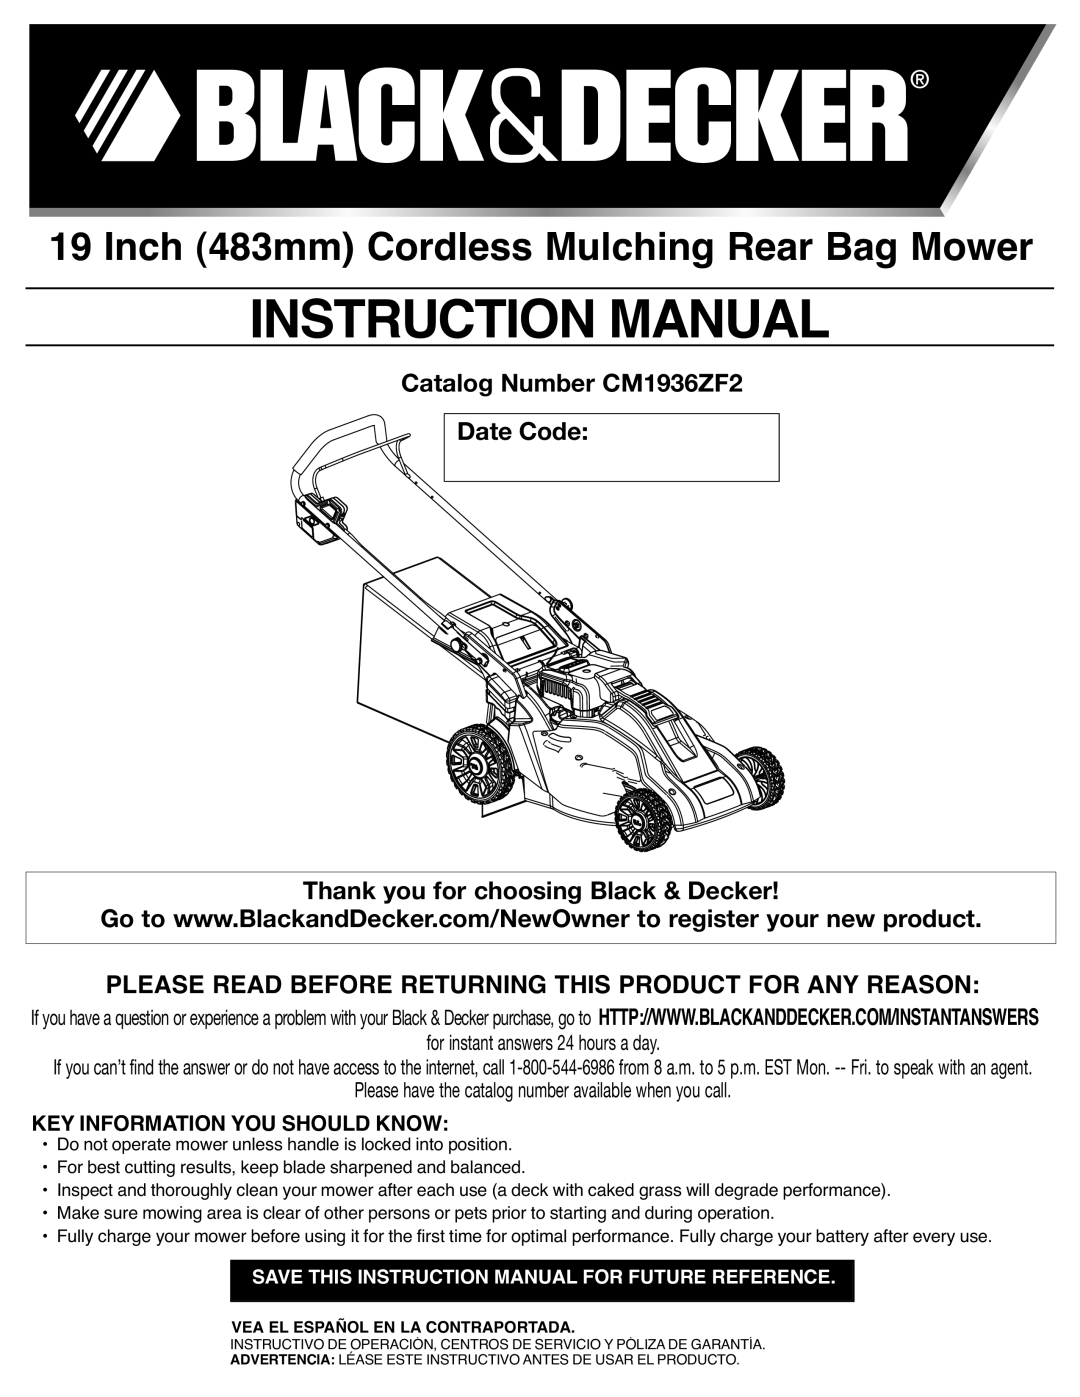 Black & Decker CM1936ZF2 instruction manual Instructionmanual, Inch 483mm Cordless Mulching Rear Bag Mower 